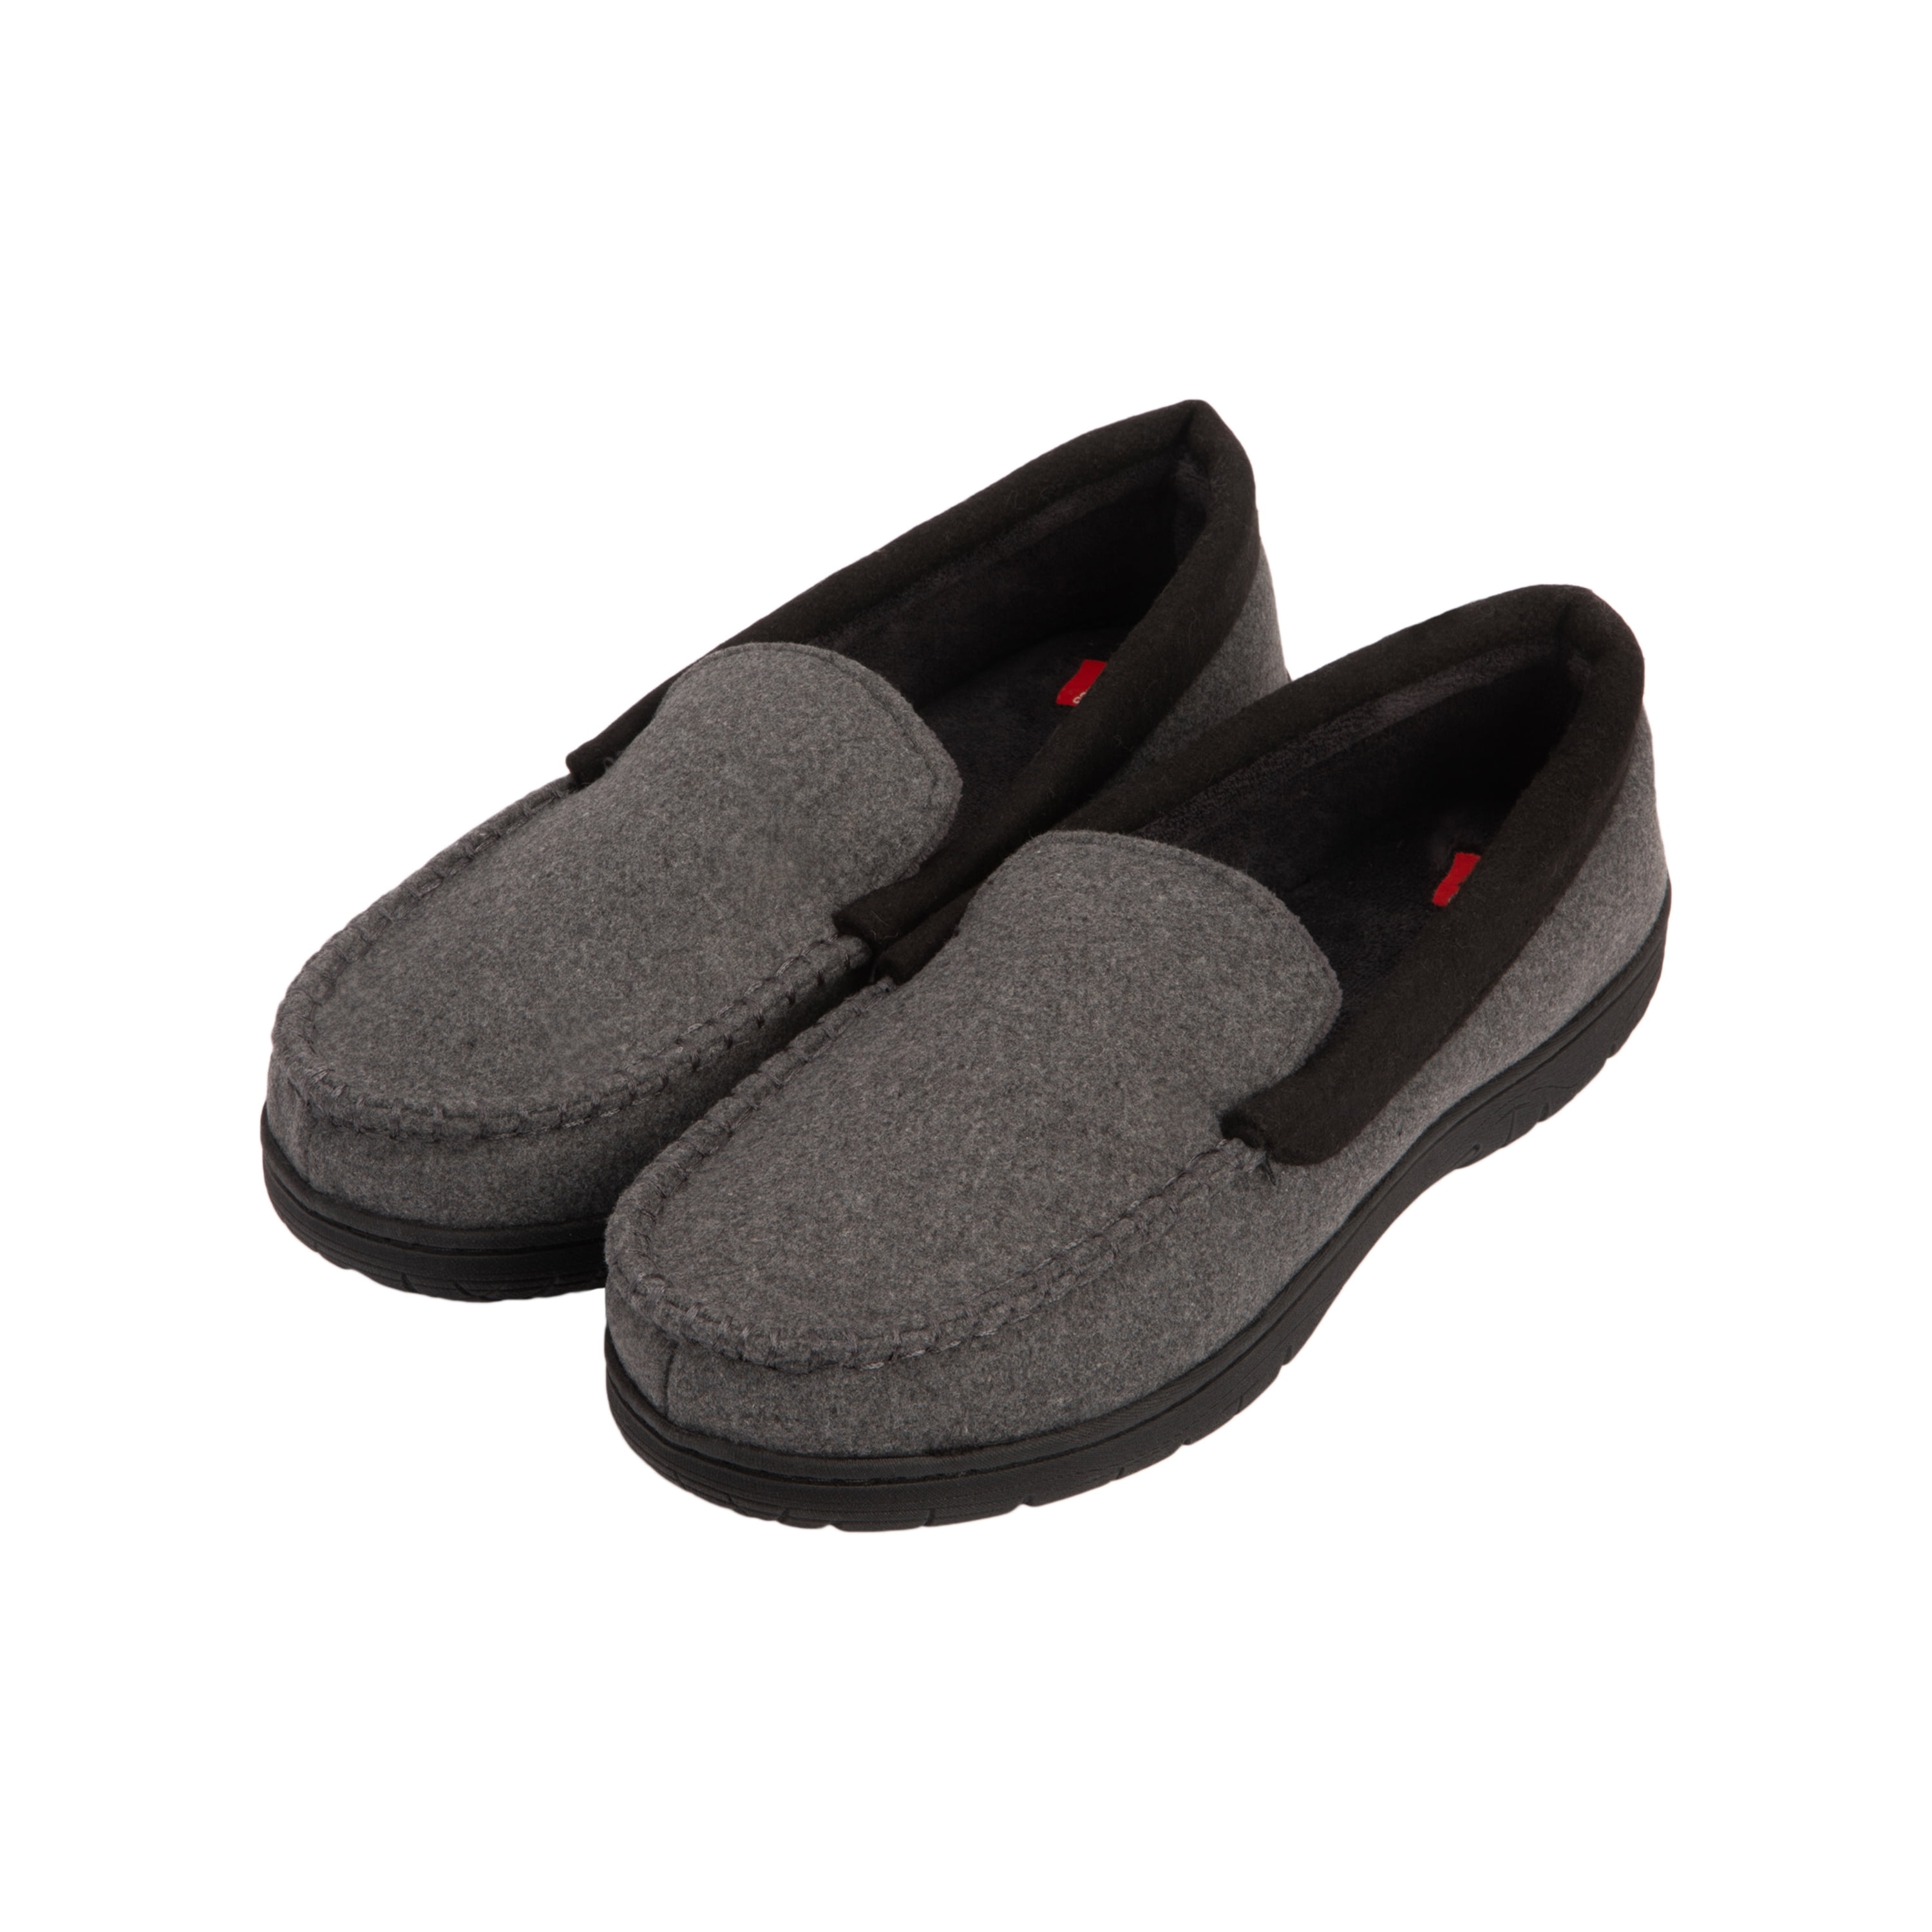 Hanes - Hanes Men's Slippers House Shoes Moccasin Comfort Memory Foam ...